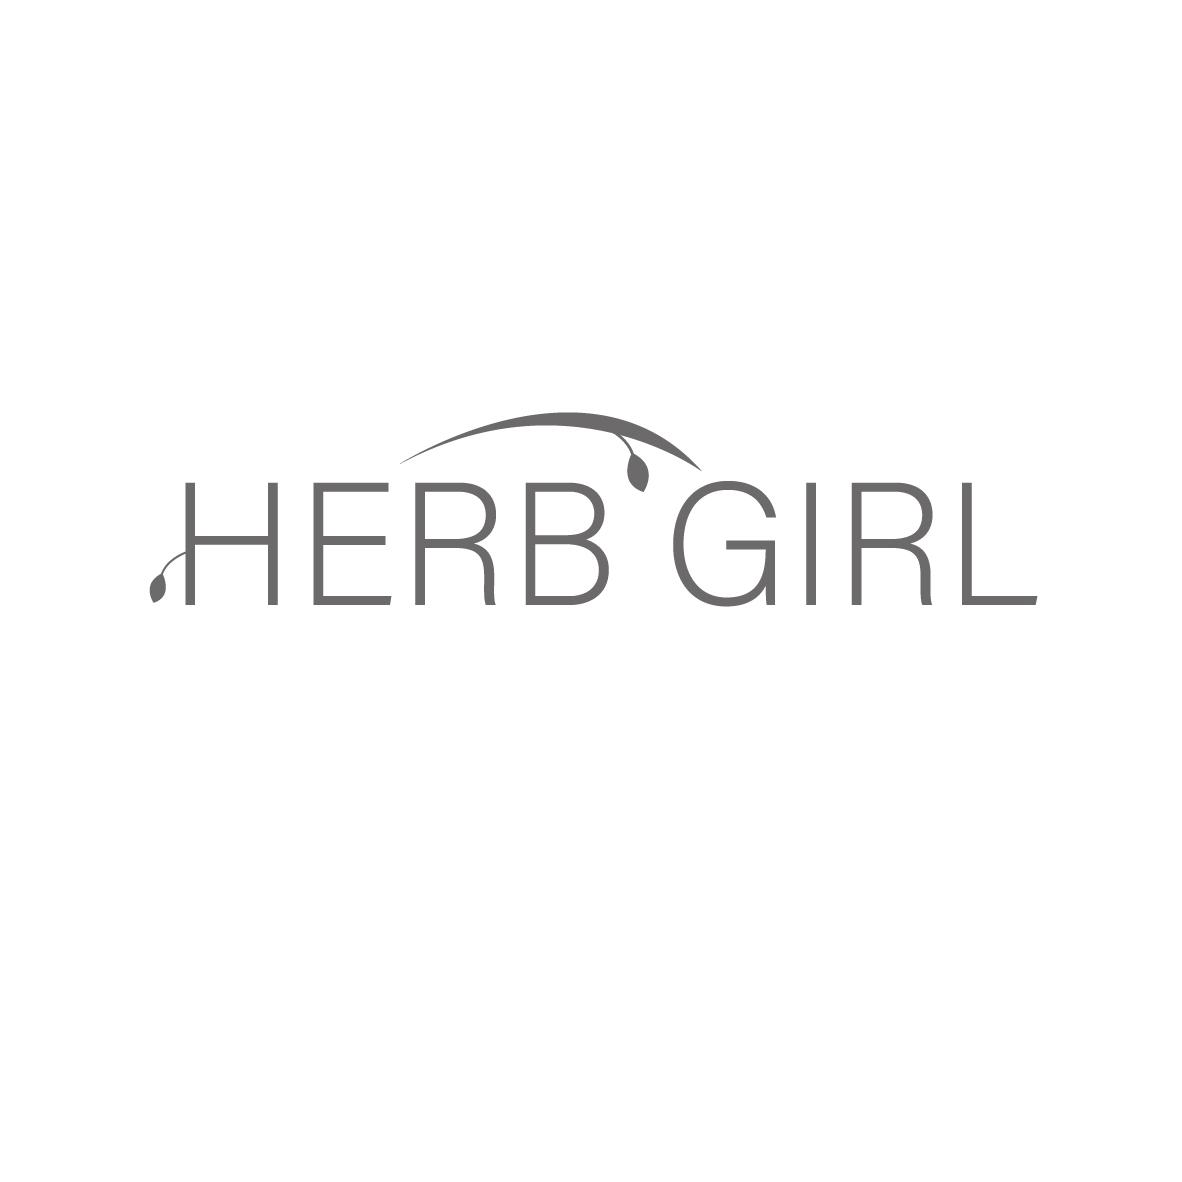 HERB GIRL